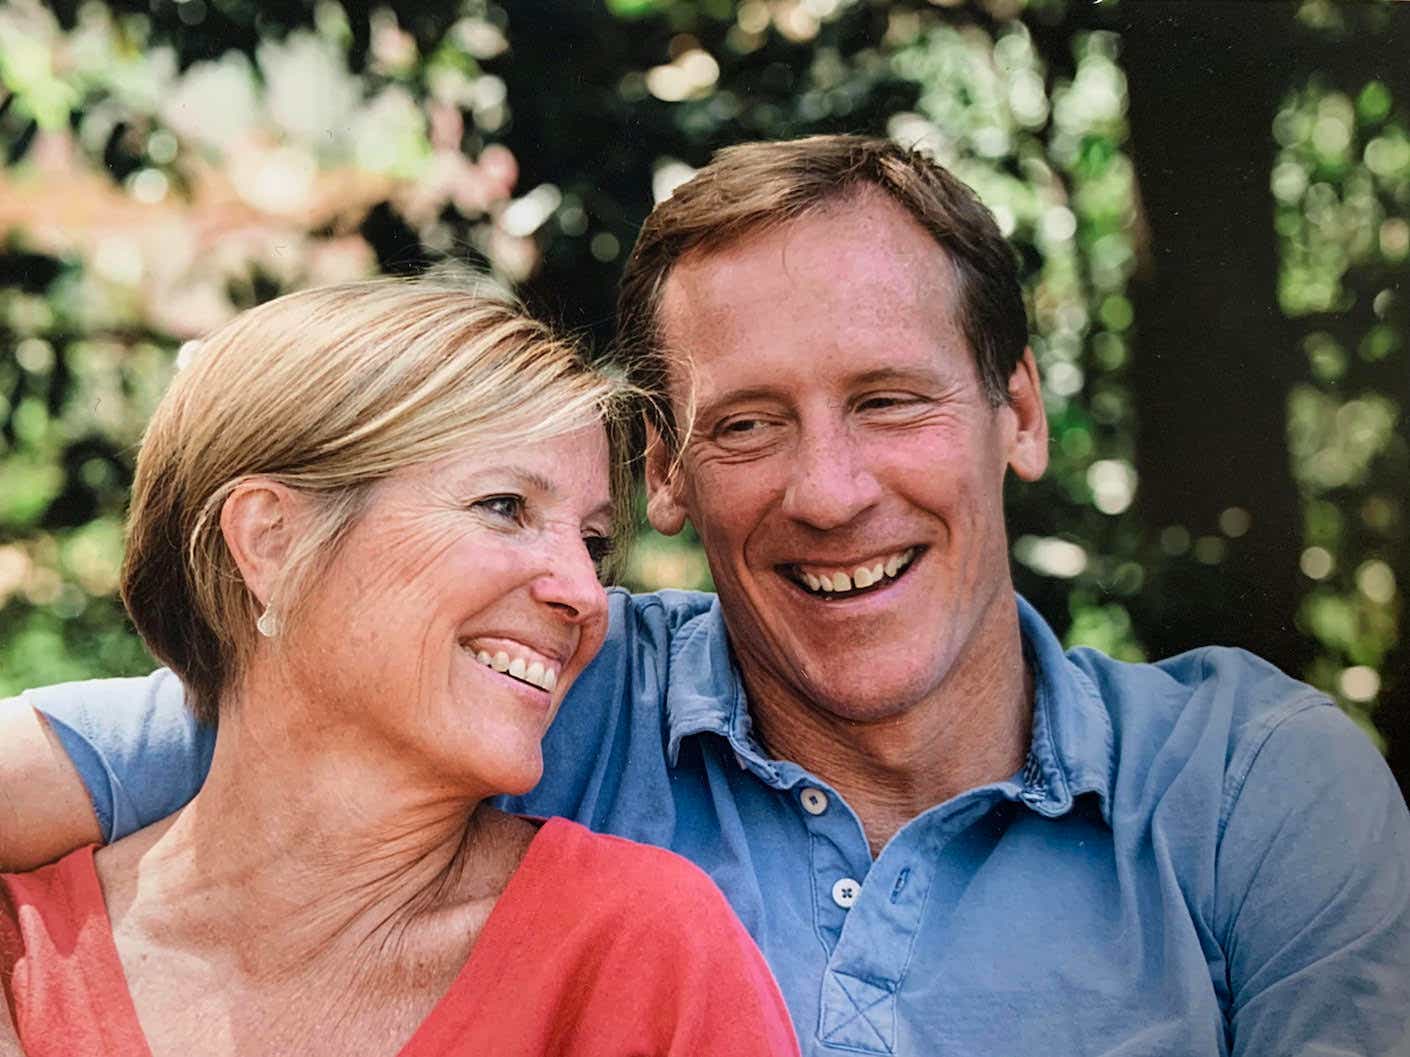 Kathy and her husband smile and pose.